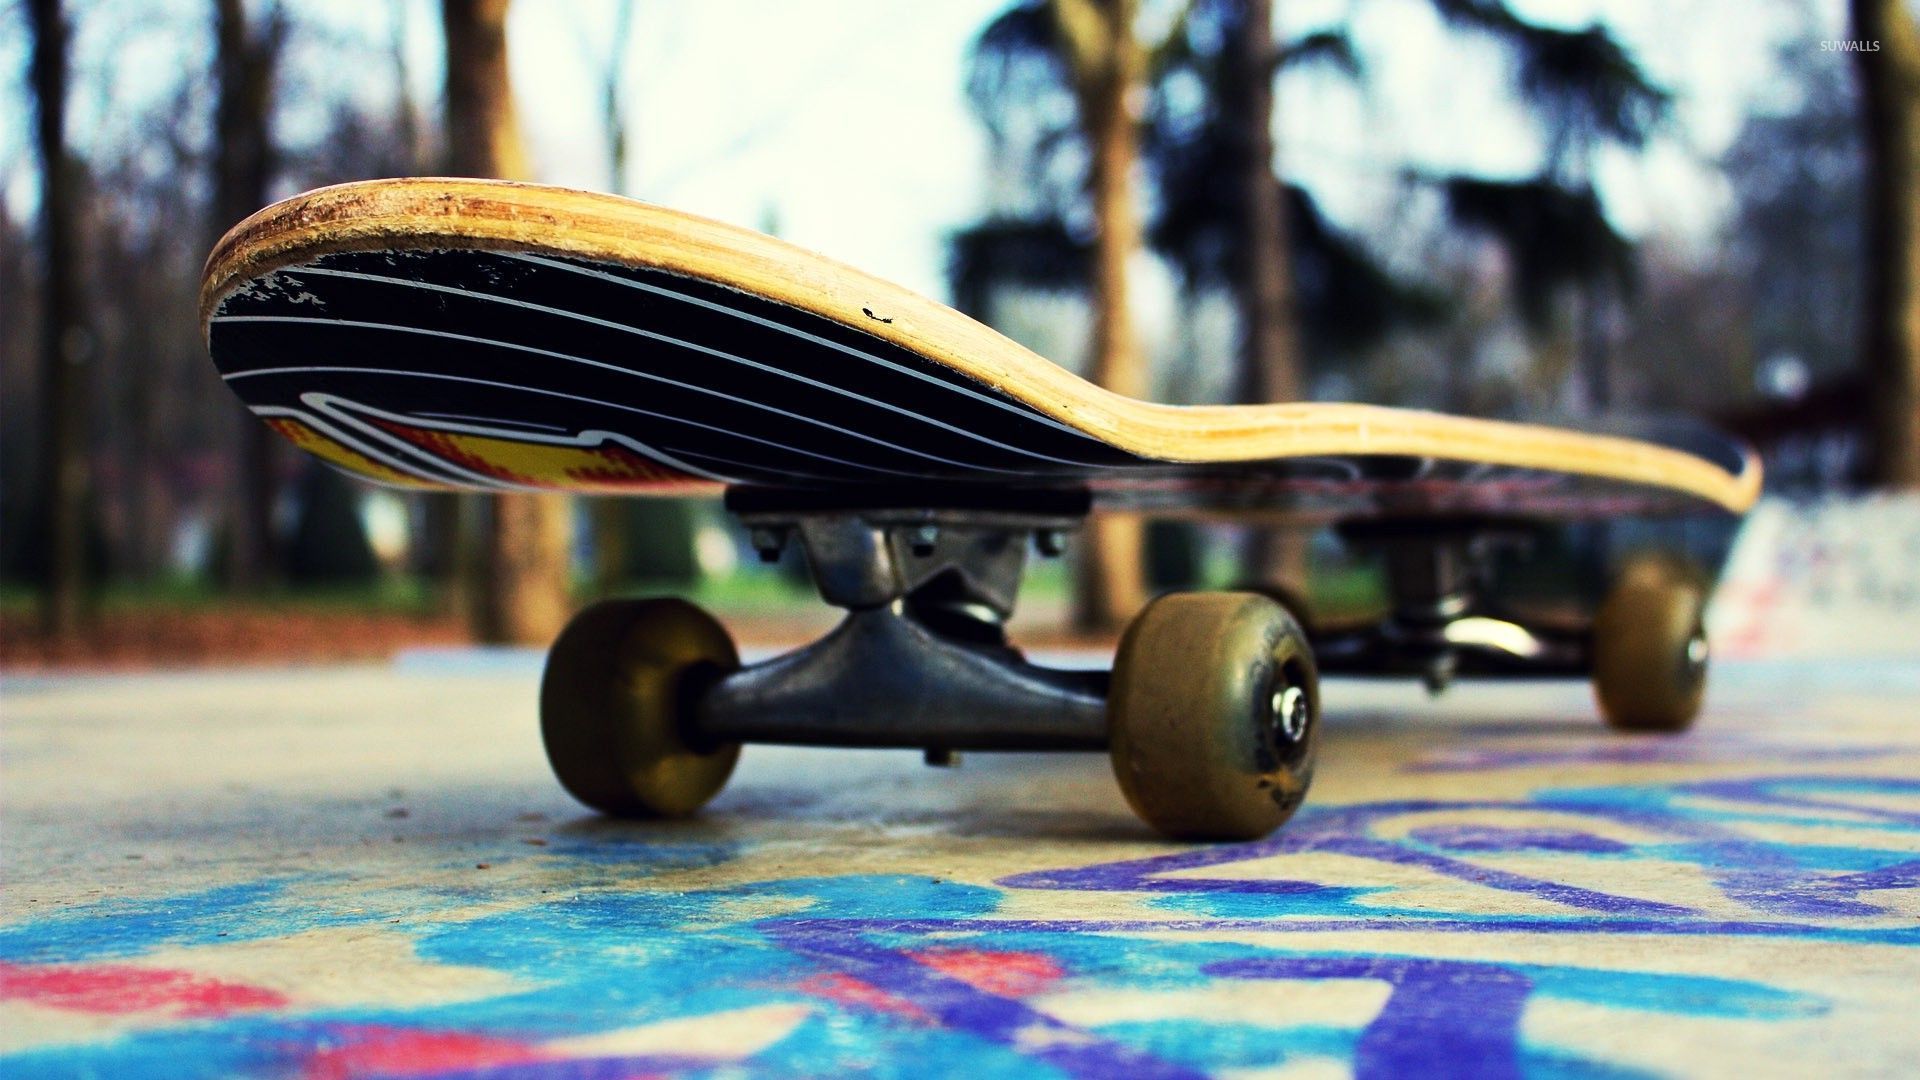 Skateboard Wallpaper Photography